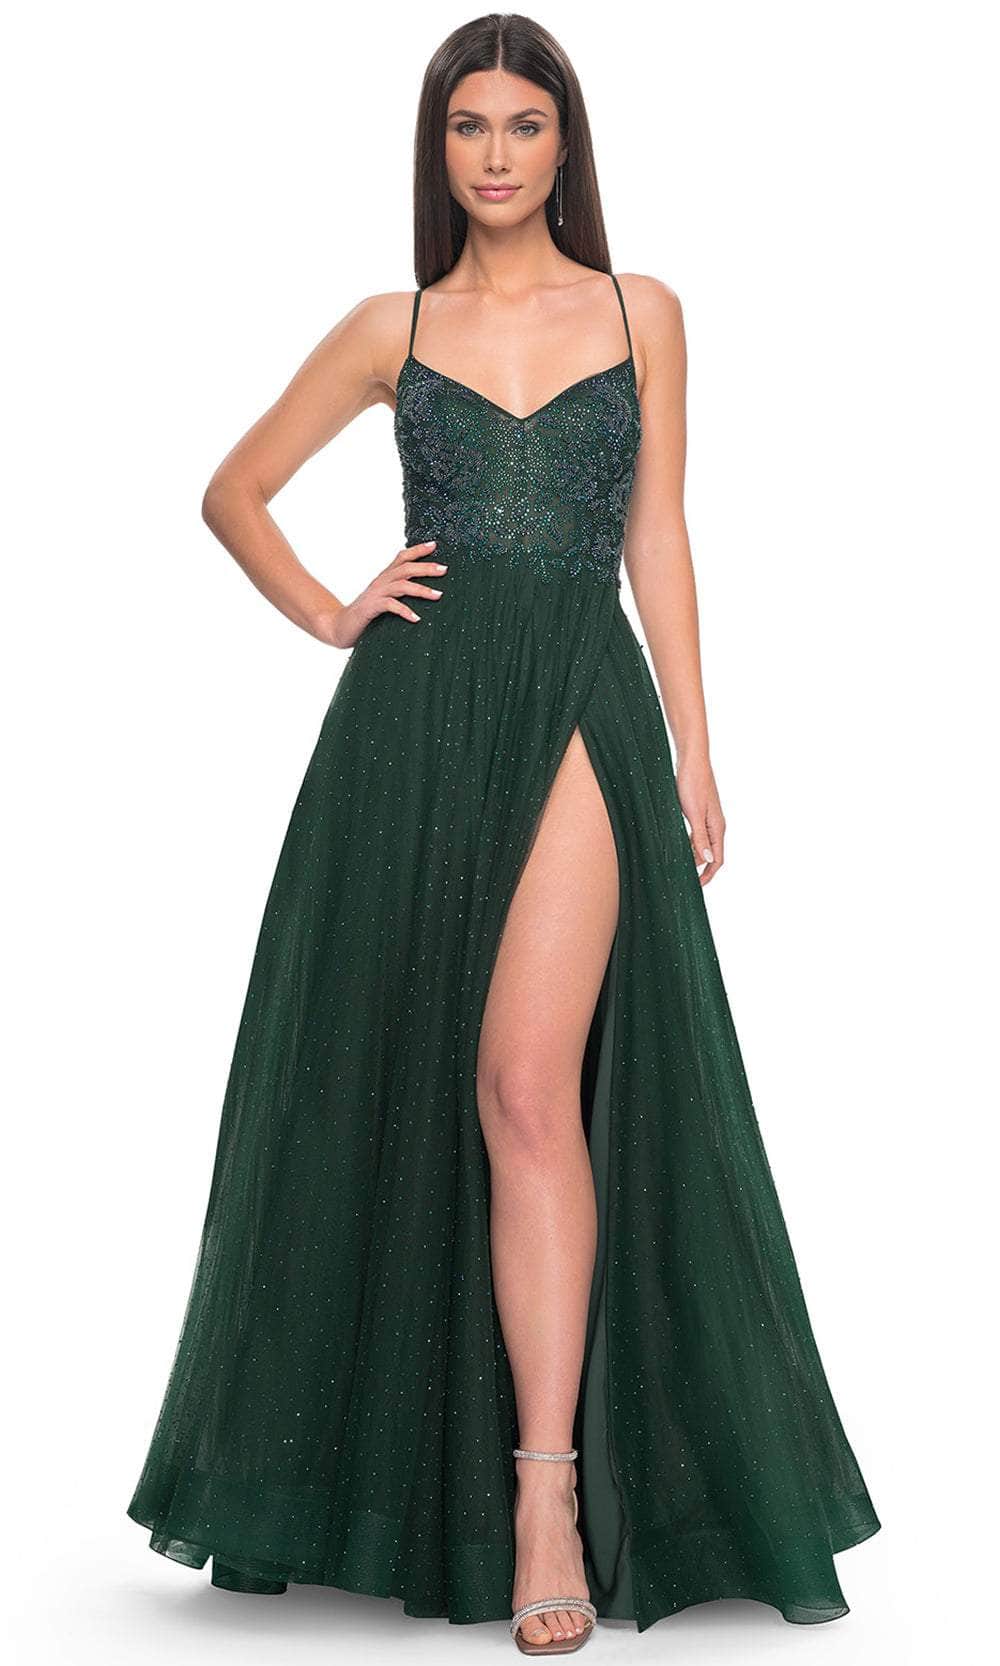 La Femme 32020 - Beaded Illusion Prom Dress
